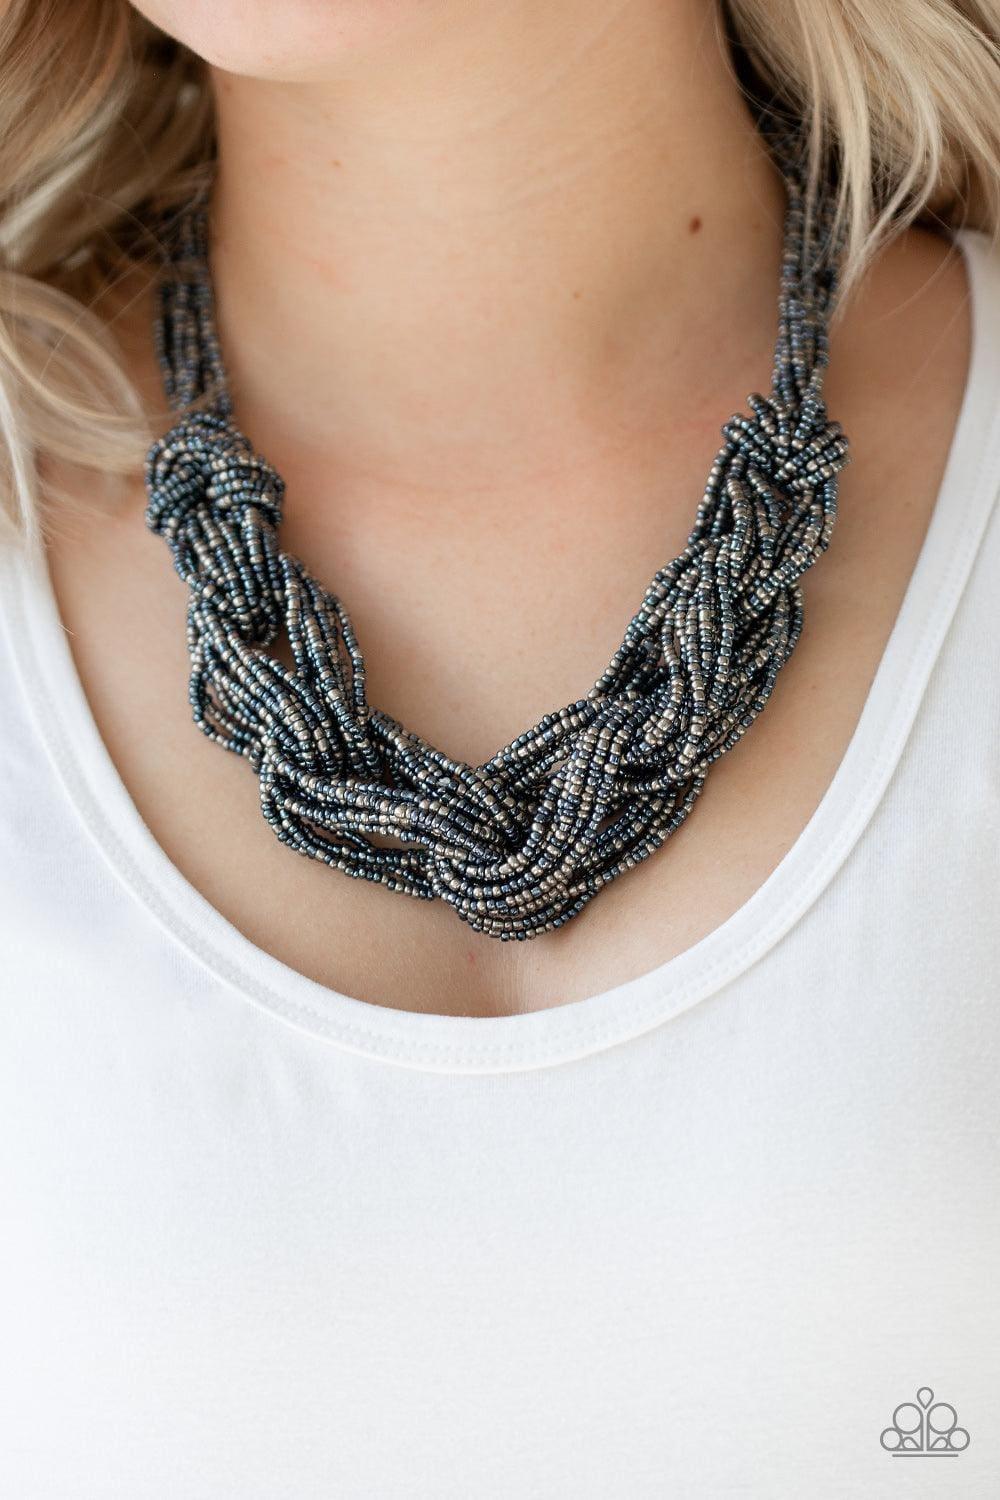 Paparazzi Accessories - City Catwalk - Blue Necklace - Bling by JessieK